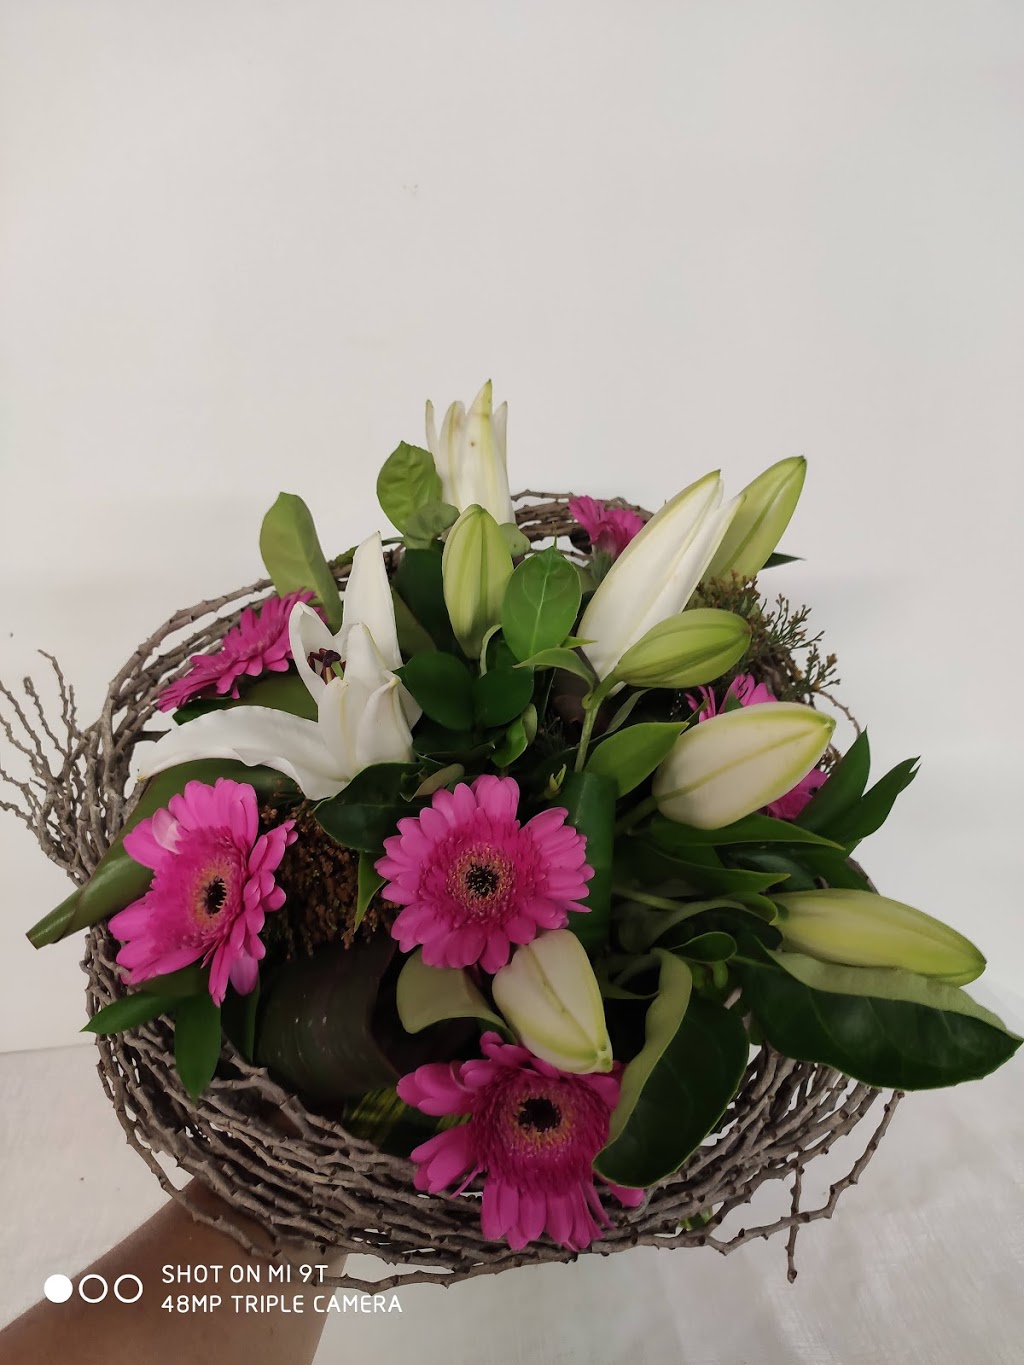 Fleurs Art Home | florist | 21 Matthew Flinders Dr, Hollywell QLD 4216, Australia | 0466394132 OR +61 466 394 132